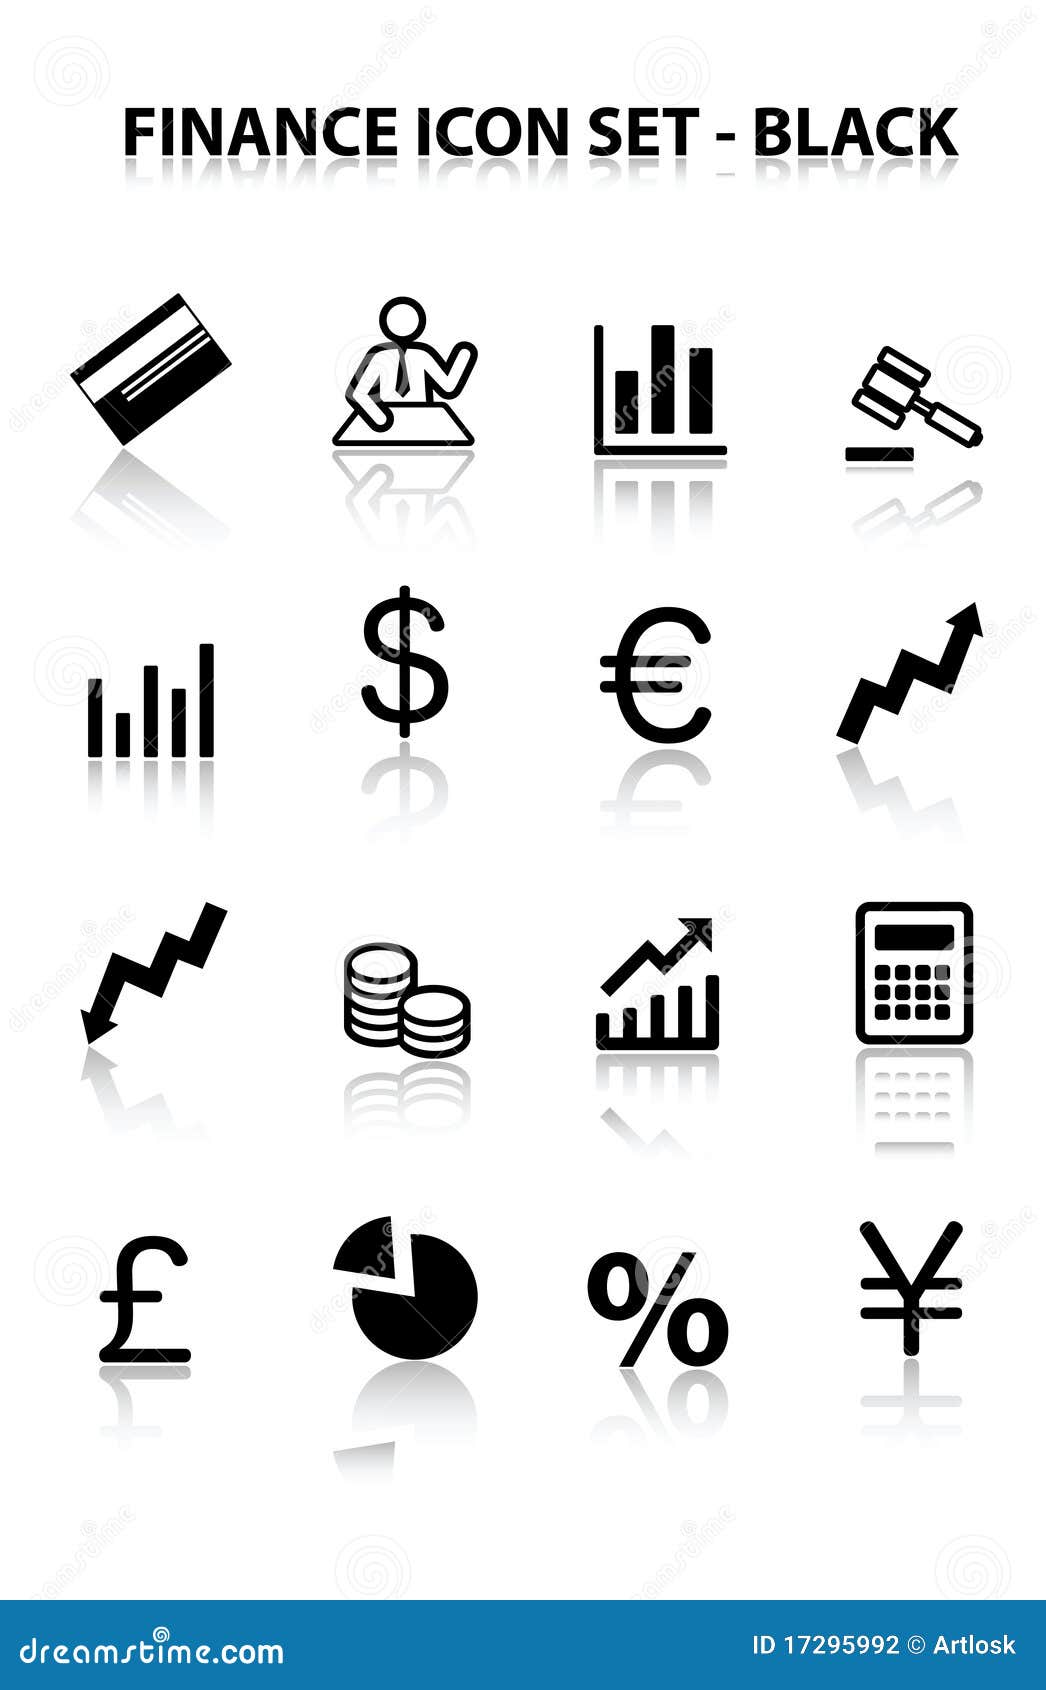 reflect finance icon set